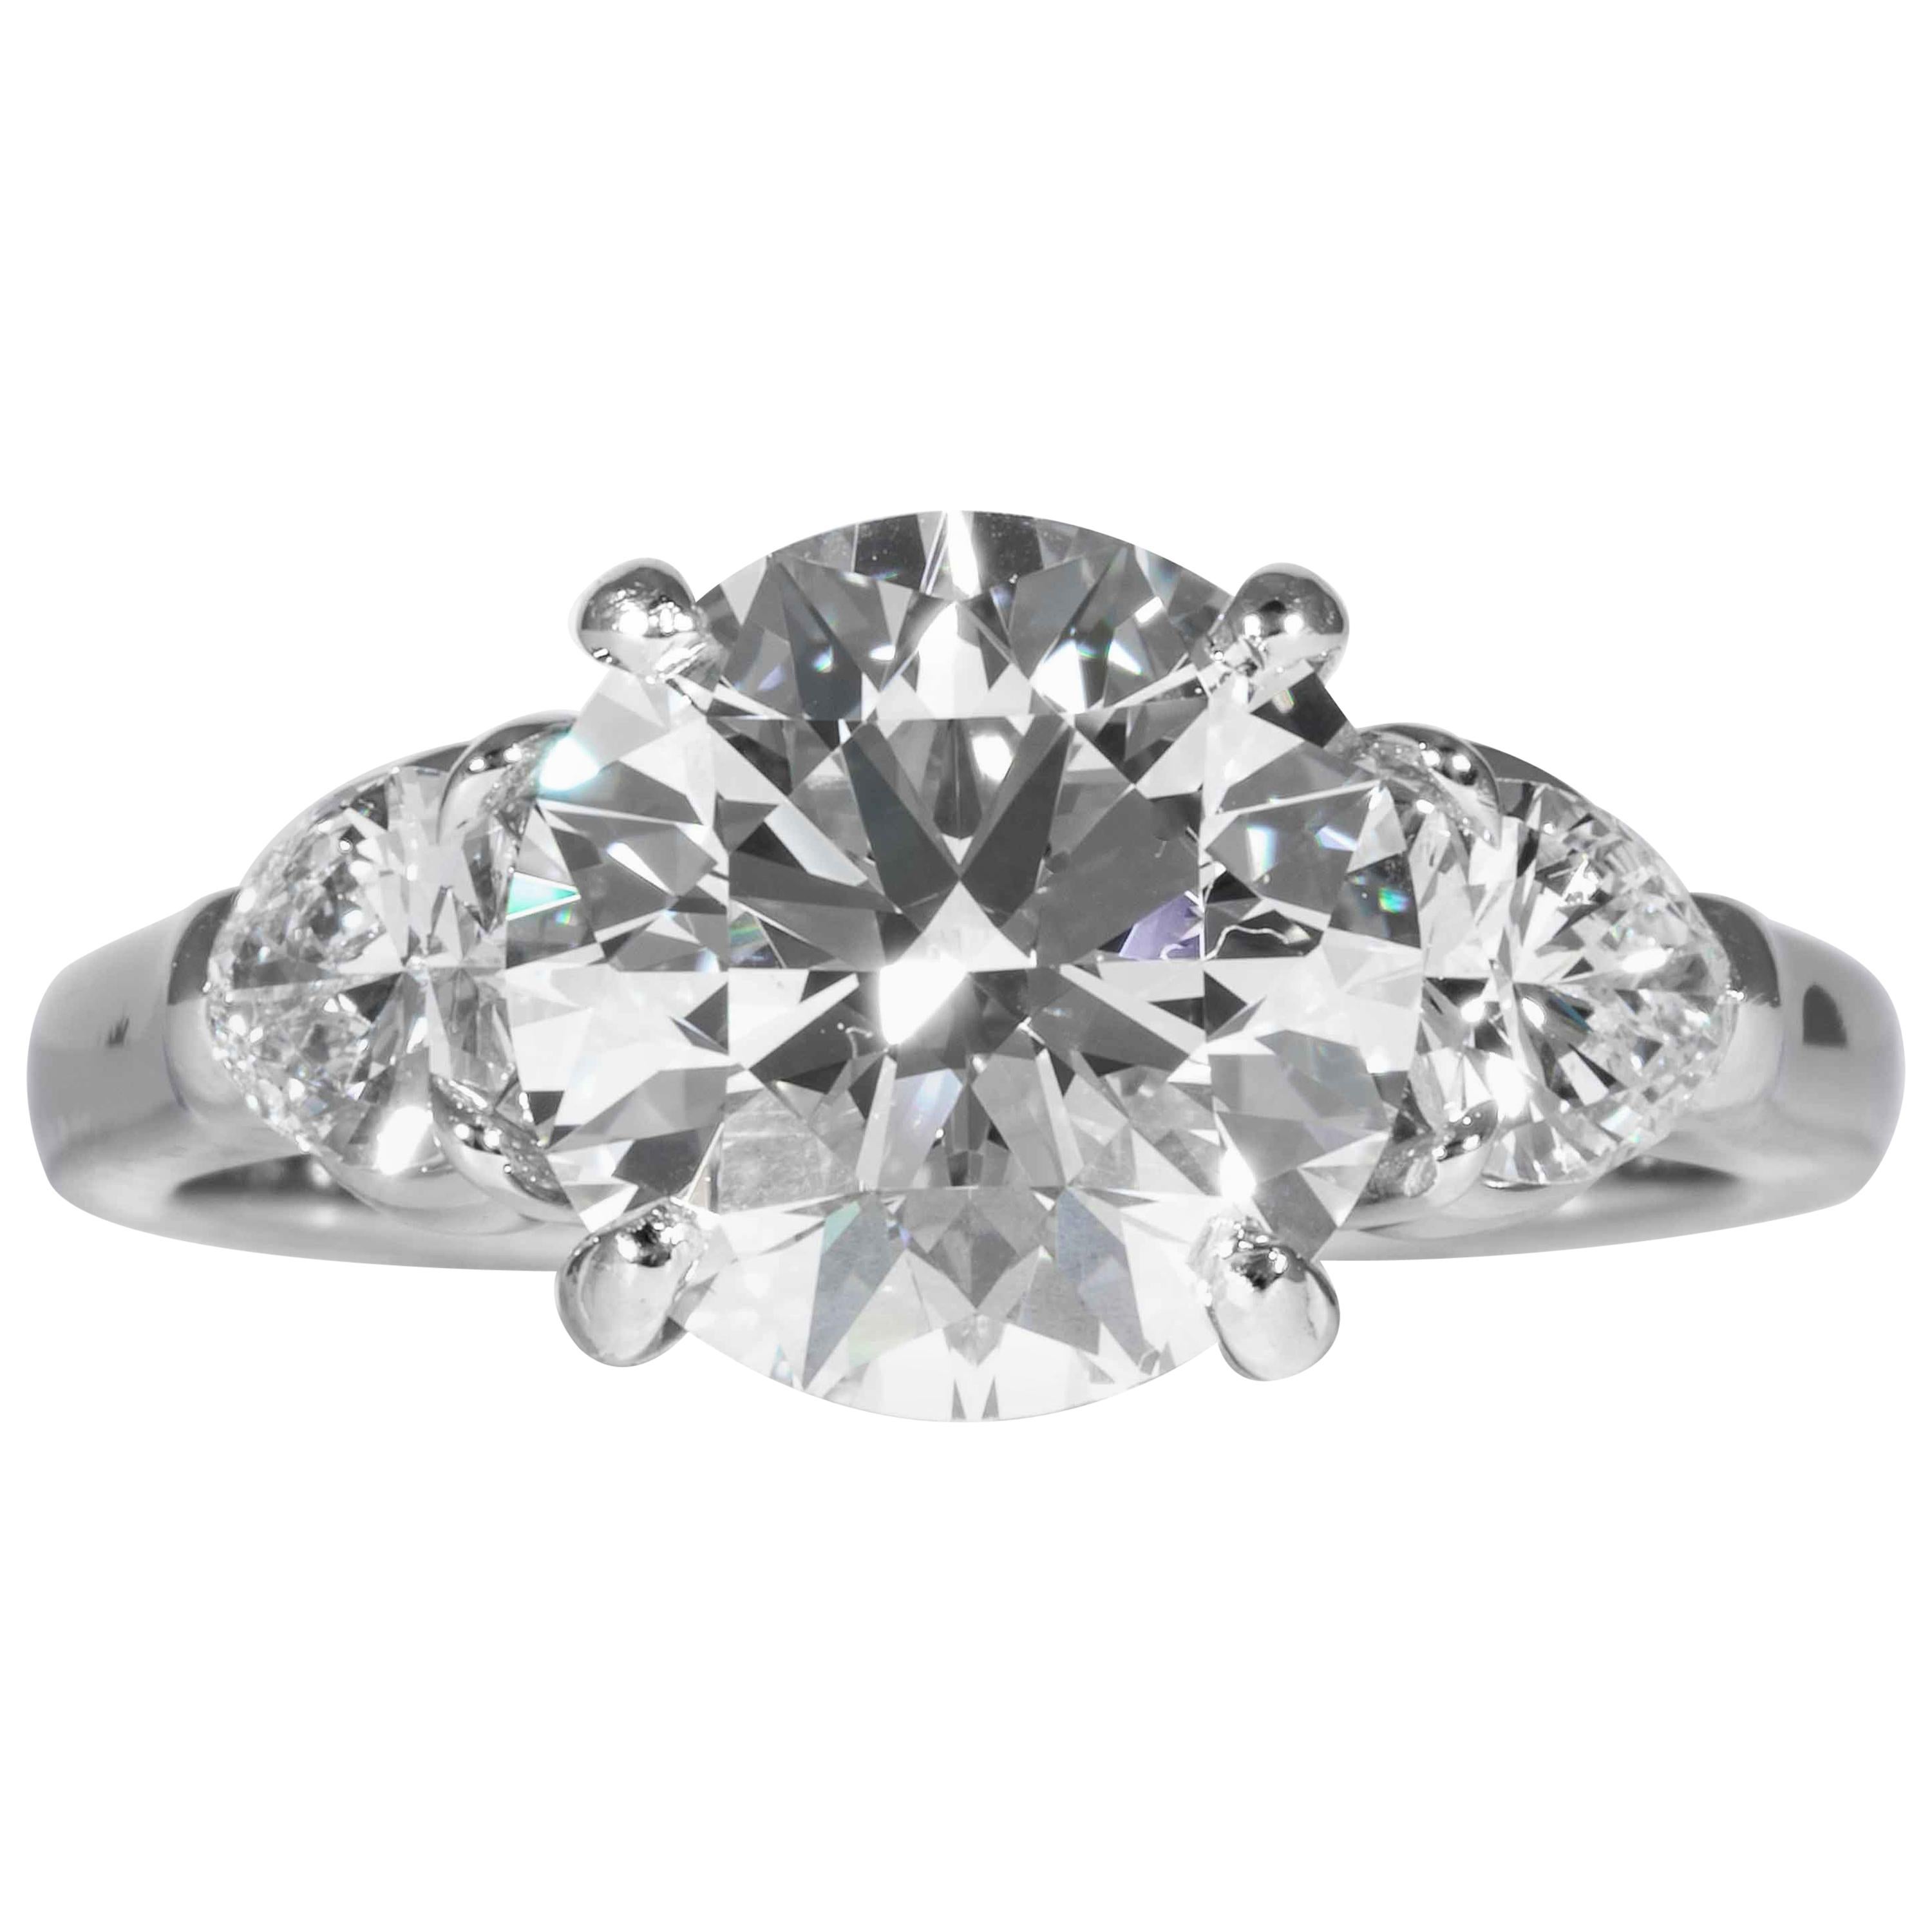 Shreve, Crump & Low GIA Certified 3.23 Carat E VVS2 Round Brilliant Diamond Ring